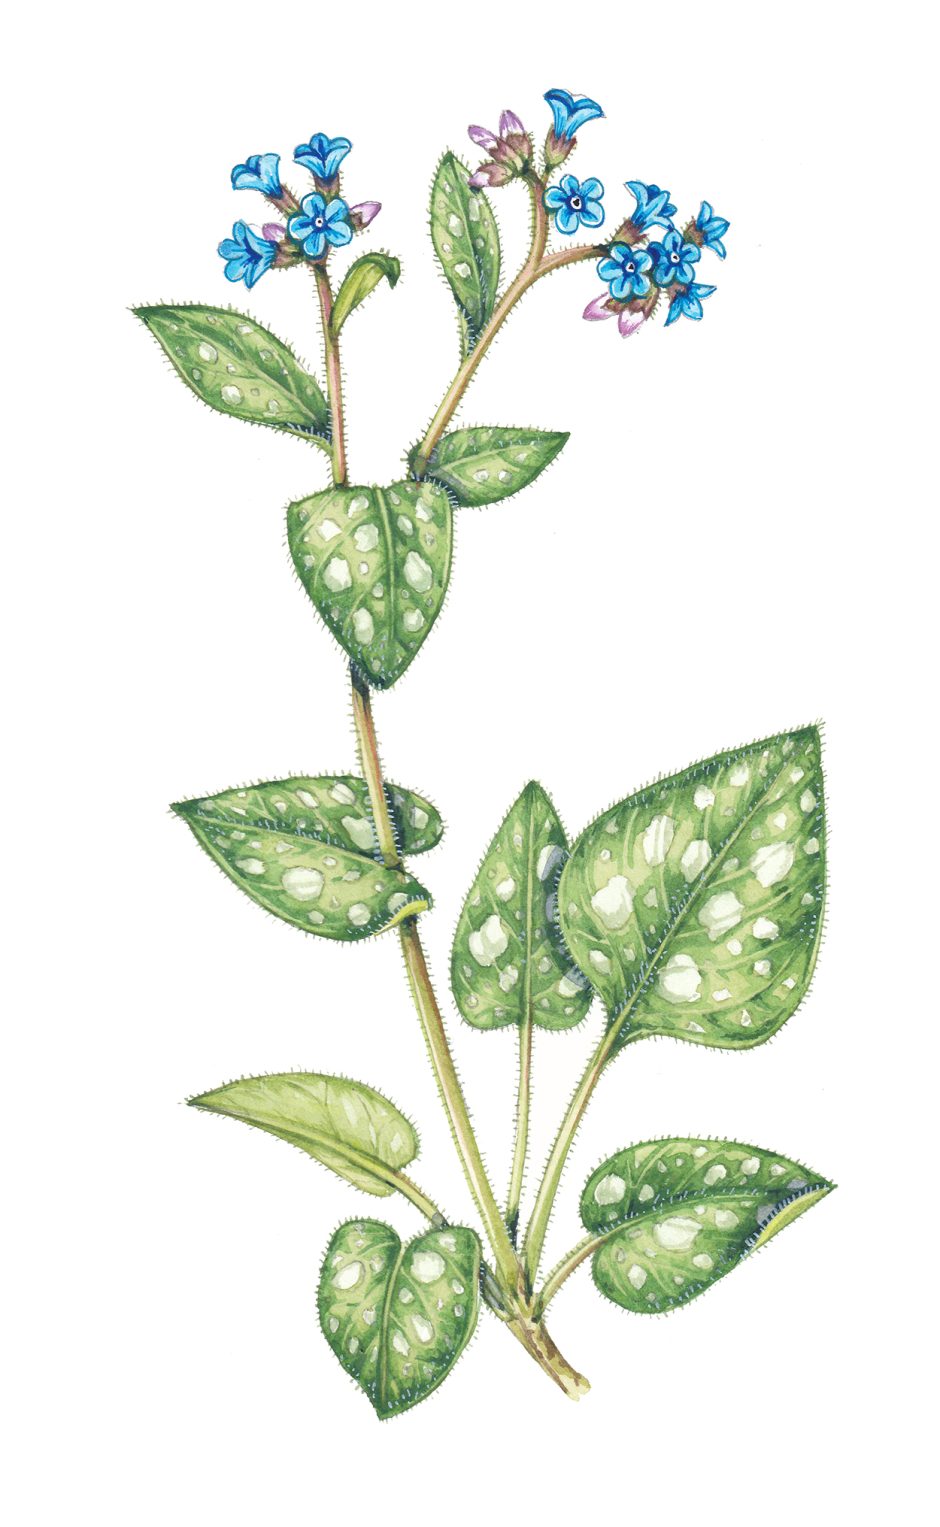 Botanical illustration Archives - Page 5 of 38 - Lizzie Harper